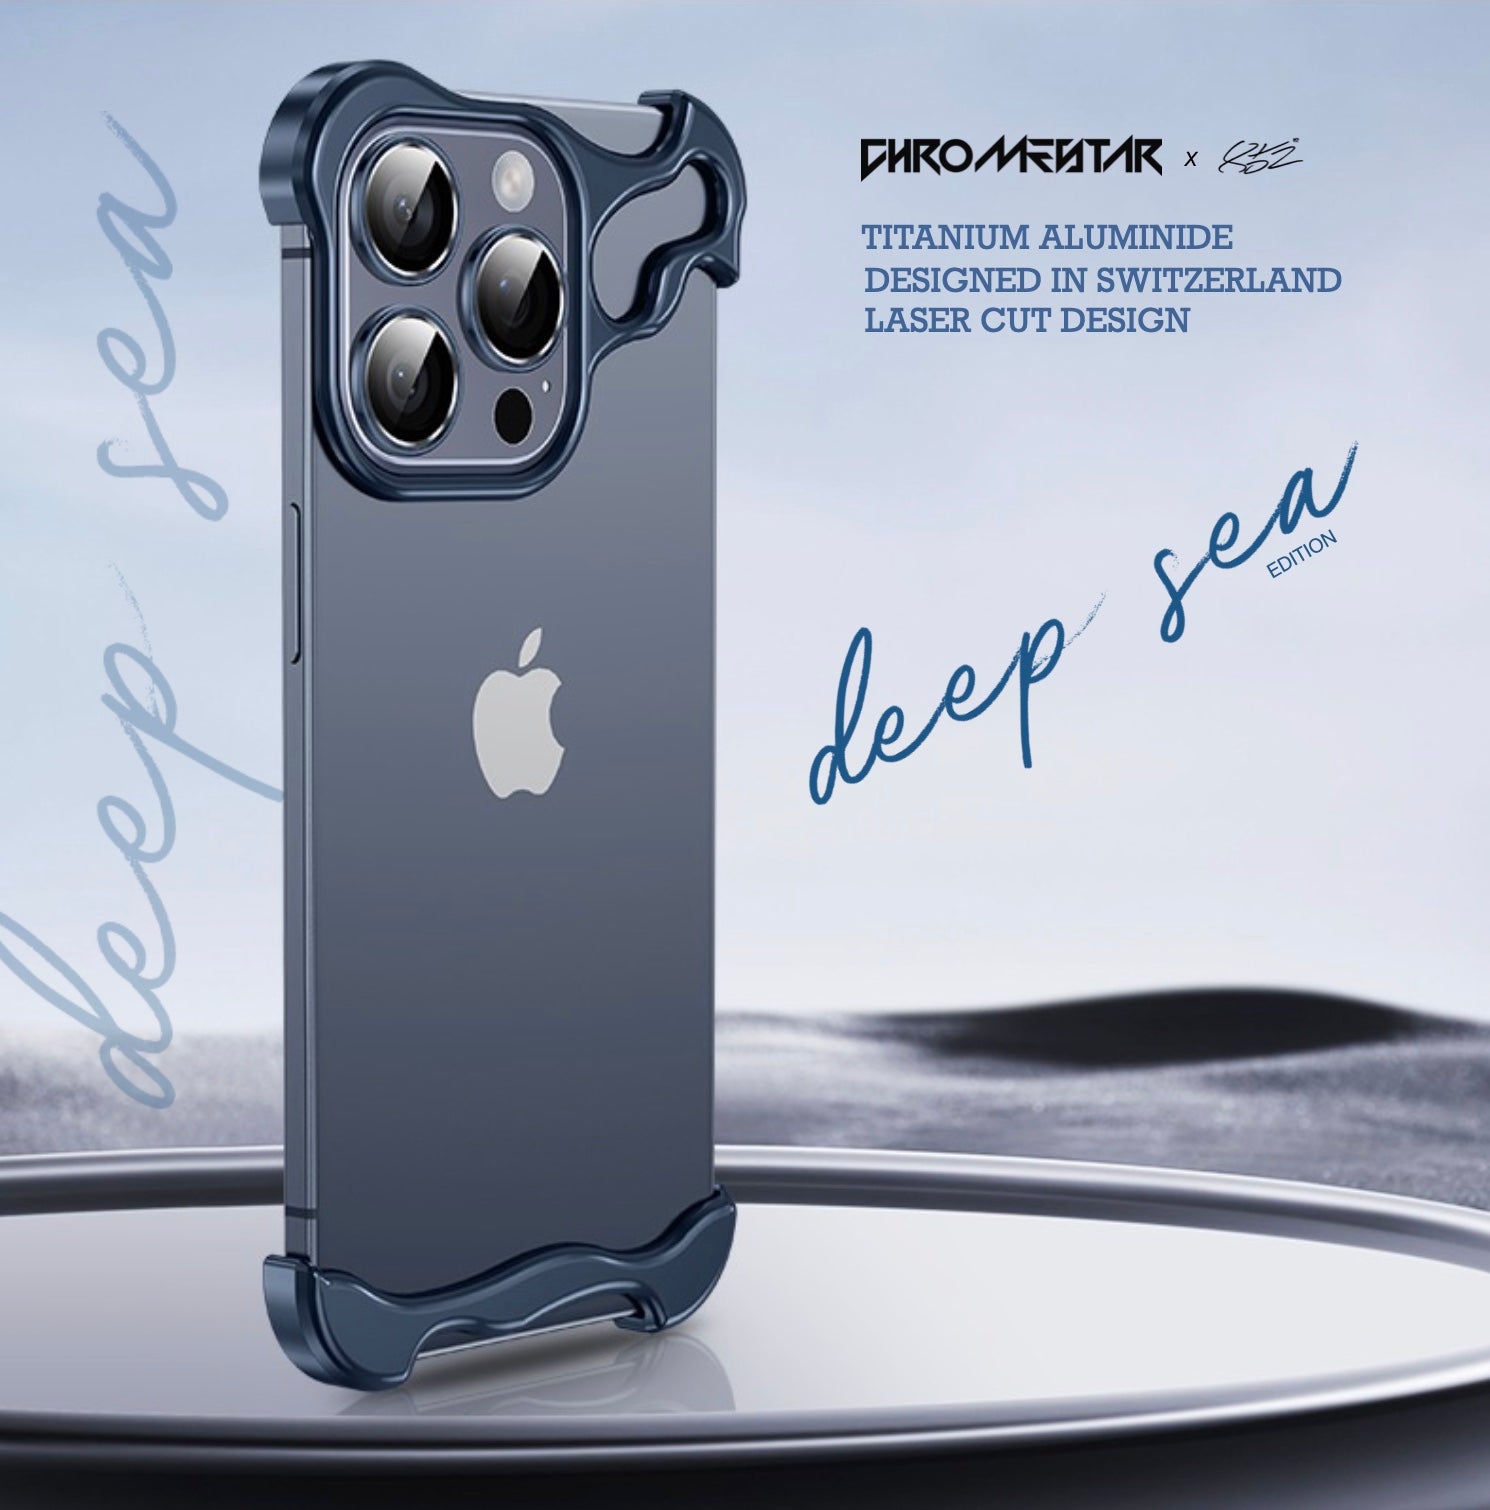 CHROMESTAR X 852 Device Encasement (Deep Sea Edition)